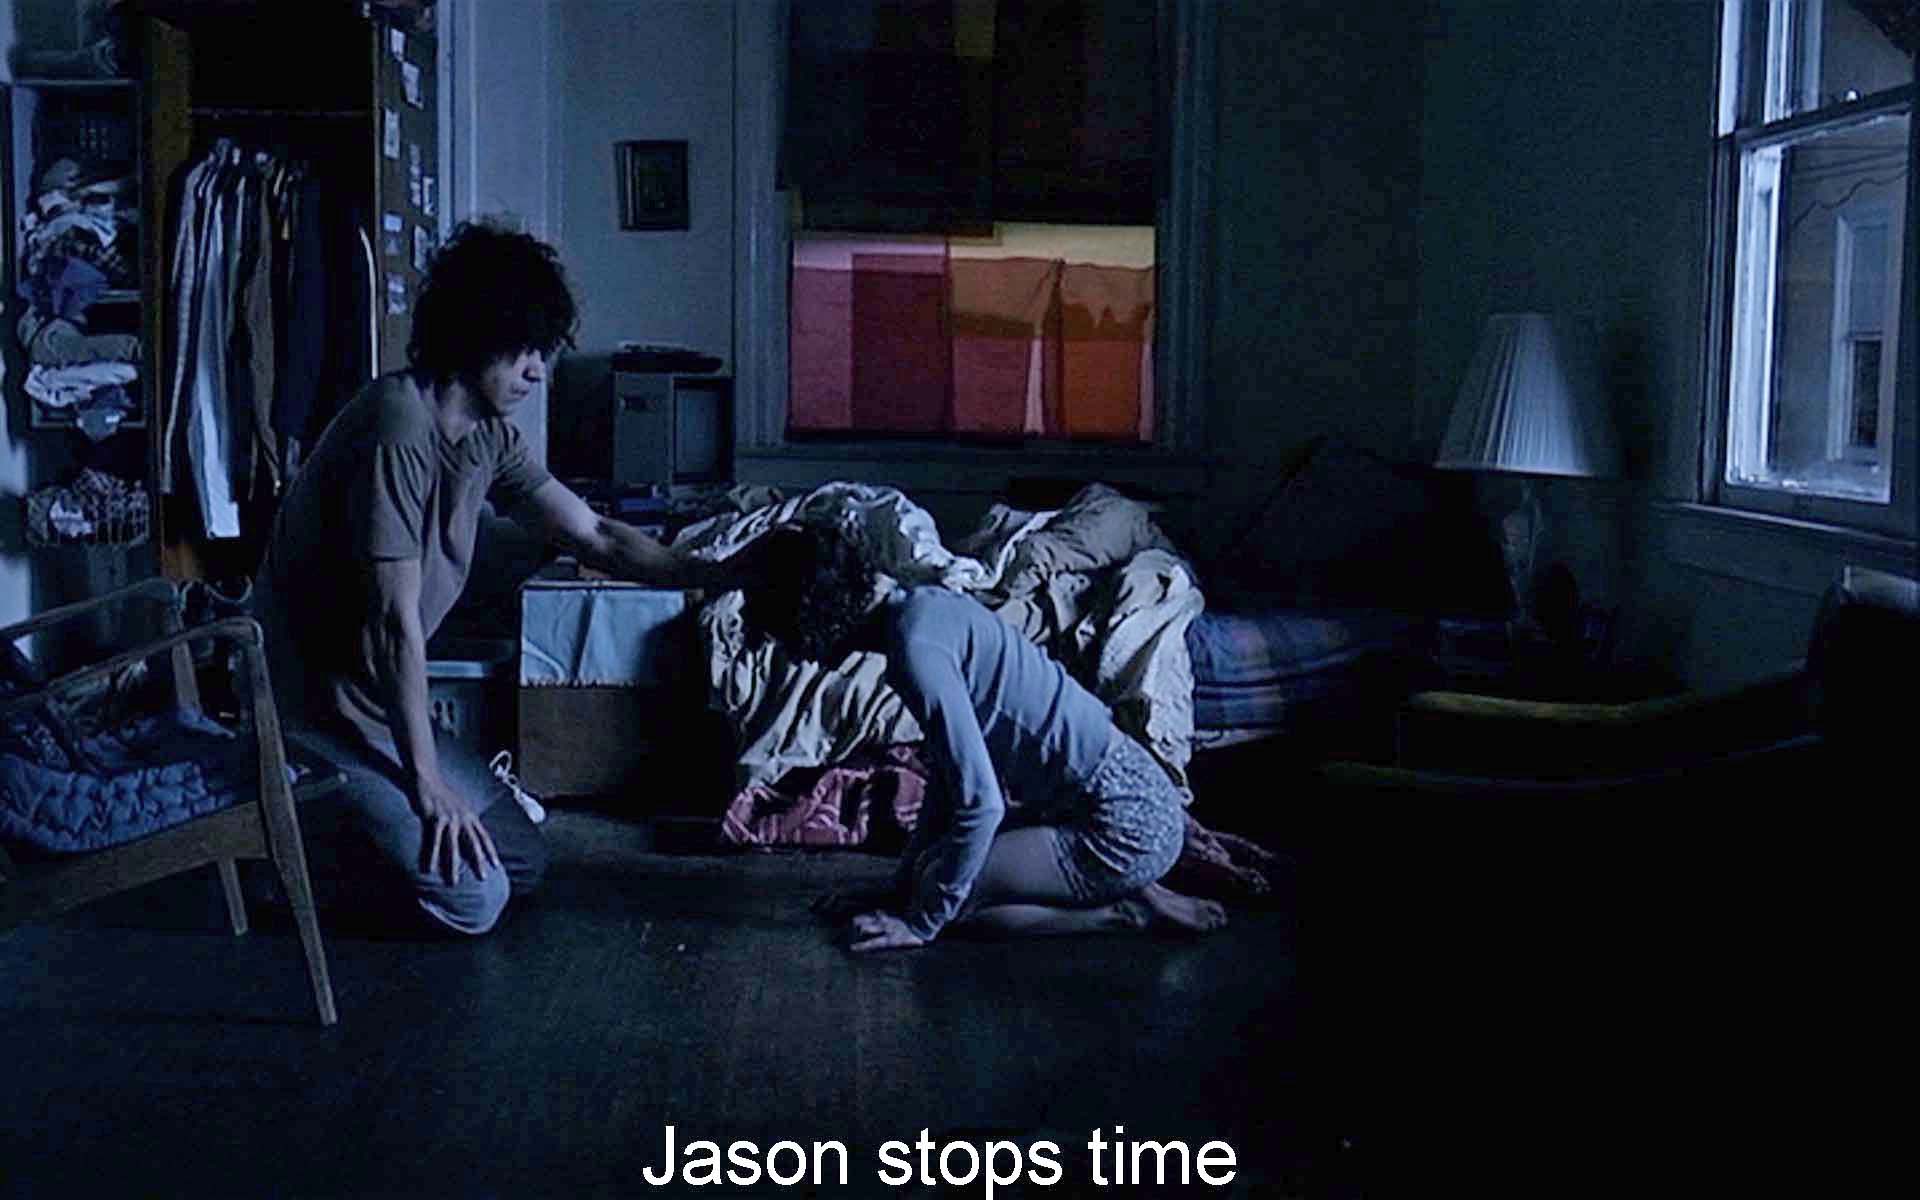 Jason stops time